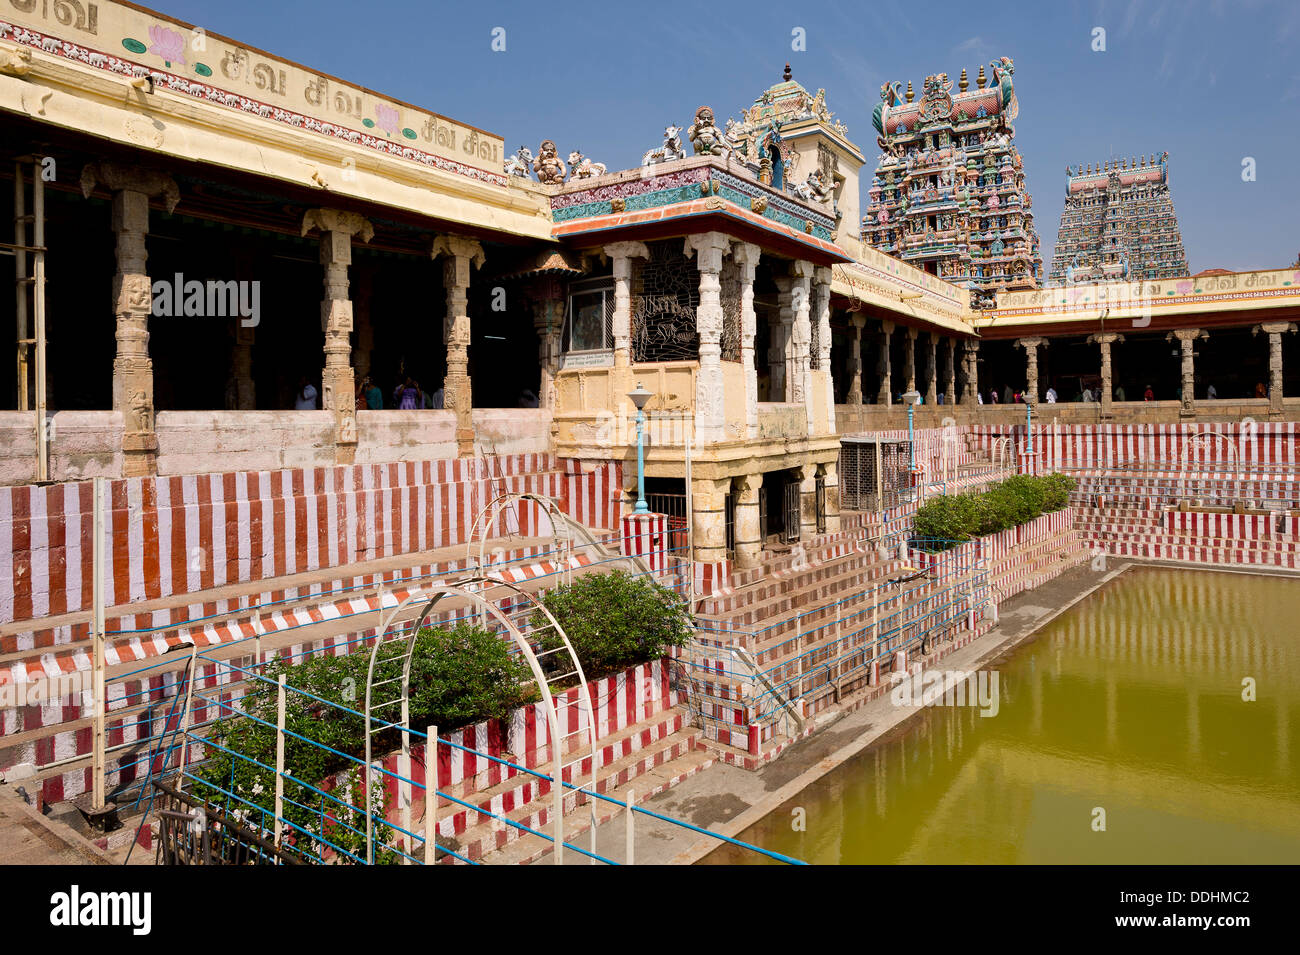 Red and white striped temple area, temple pond, Meenakshi Amman Temple or Sri Meenakshi Sundareswarar Temple Stock Photo